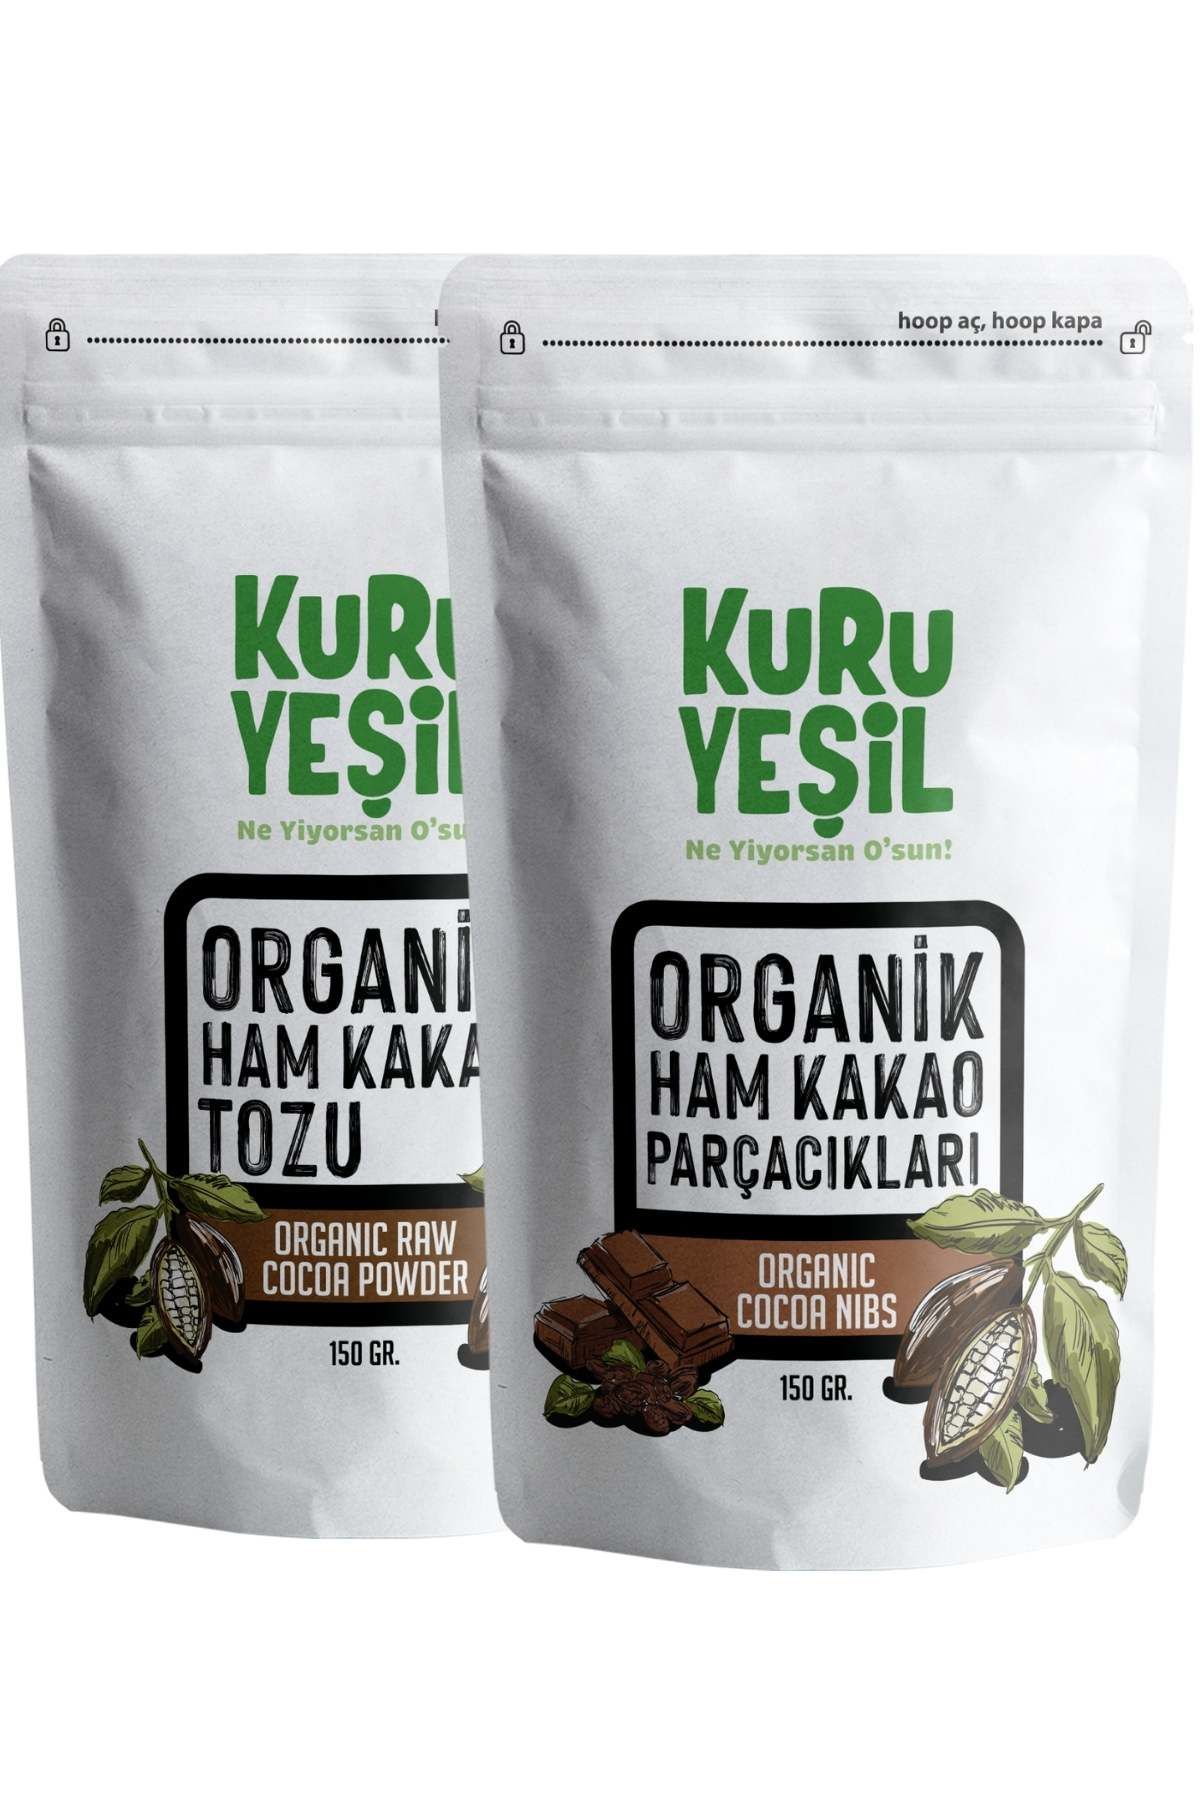 Kuru Yeşil Organik Kakao Paketi 300 Gr | Organik Ham Kakao Tozu | Organik Kakao Nibs